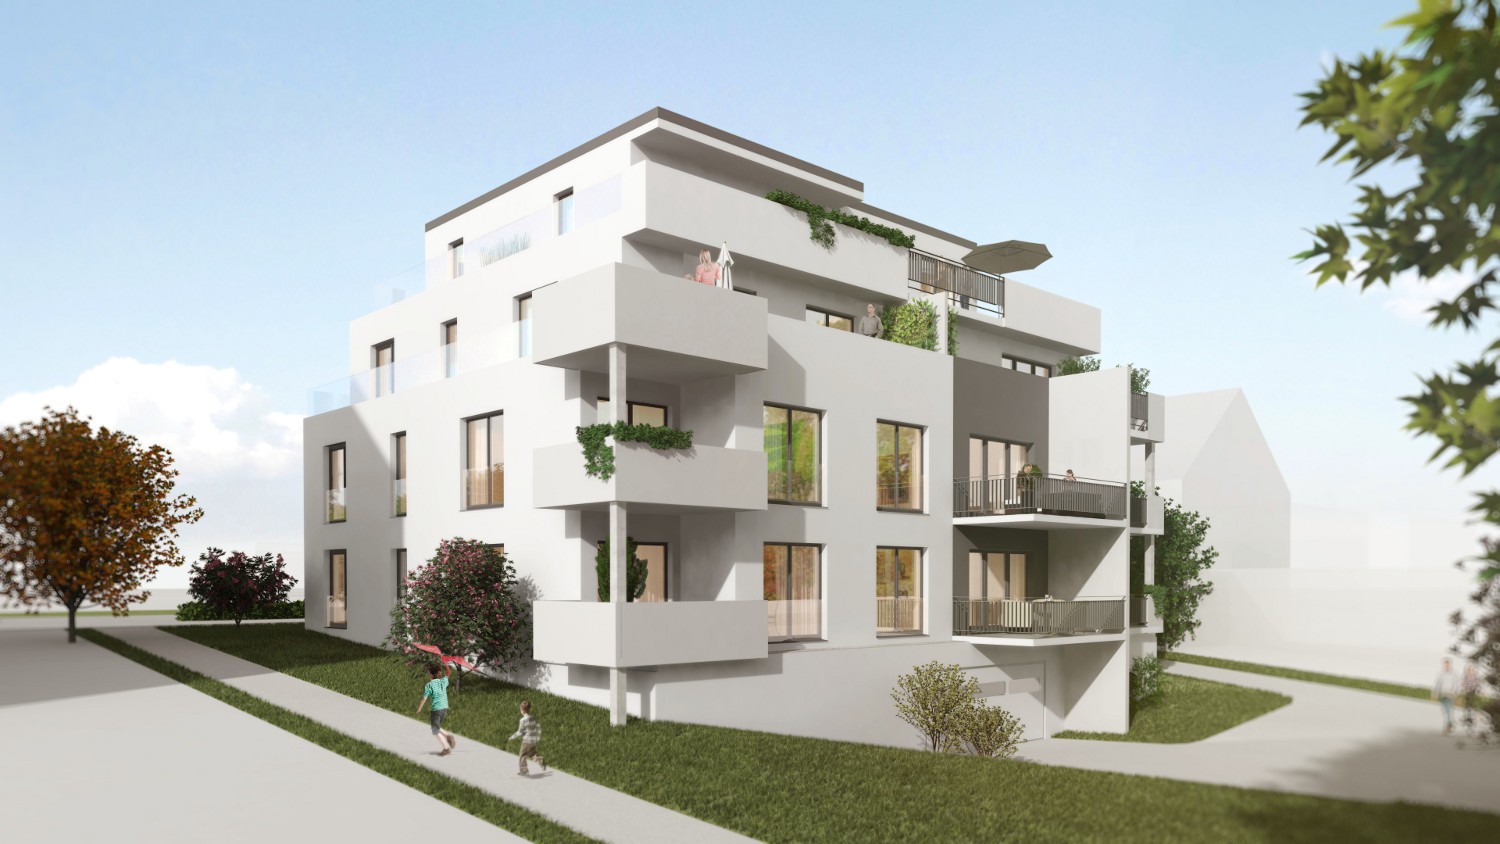 Neubau eines Mehrfamilienhauses in Osnabrück